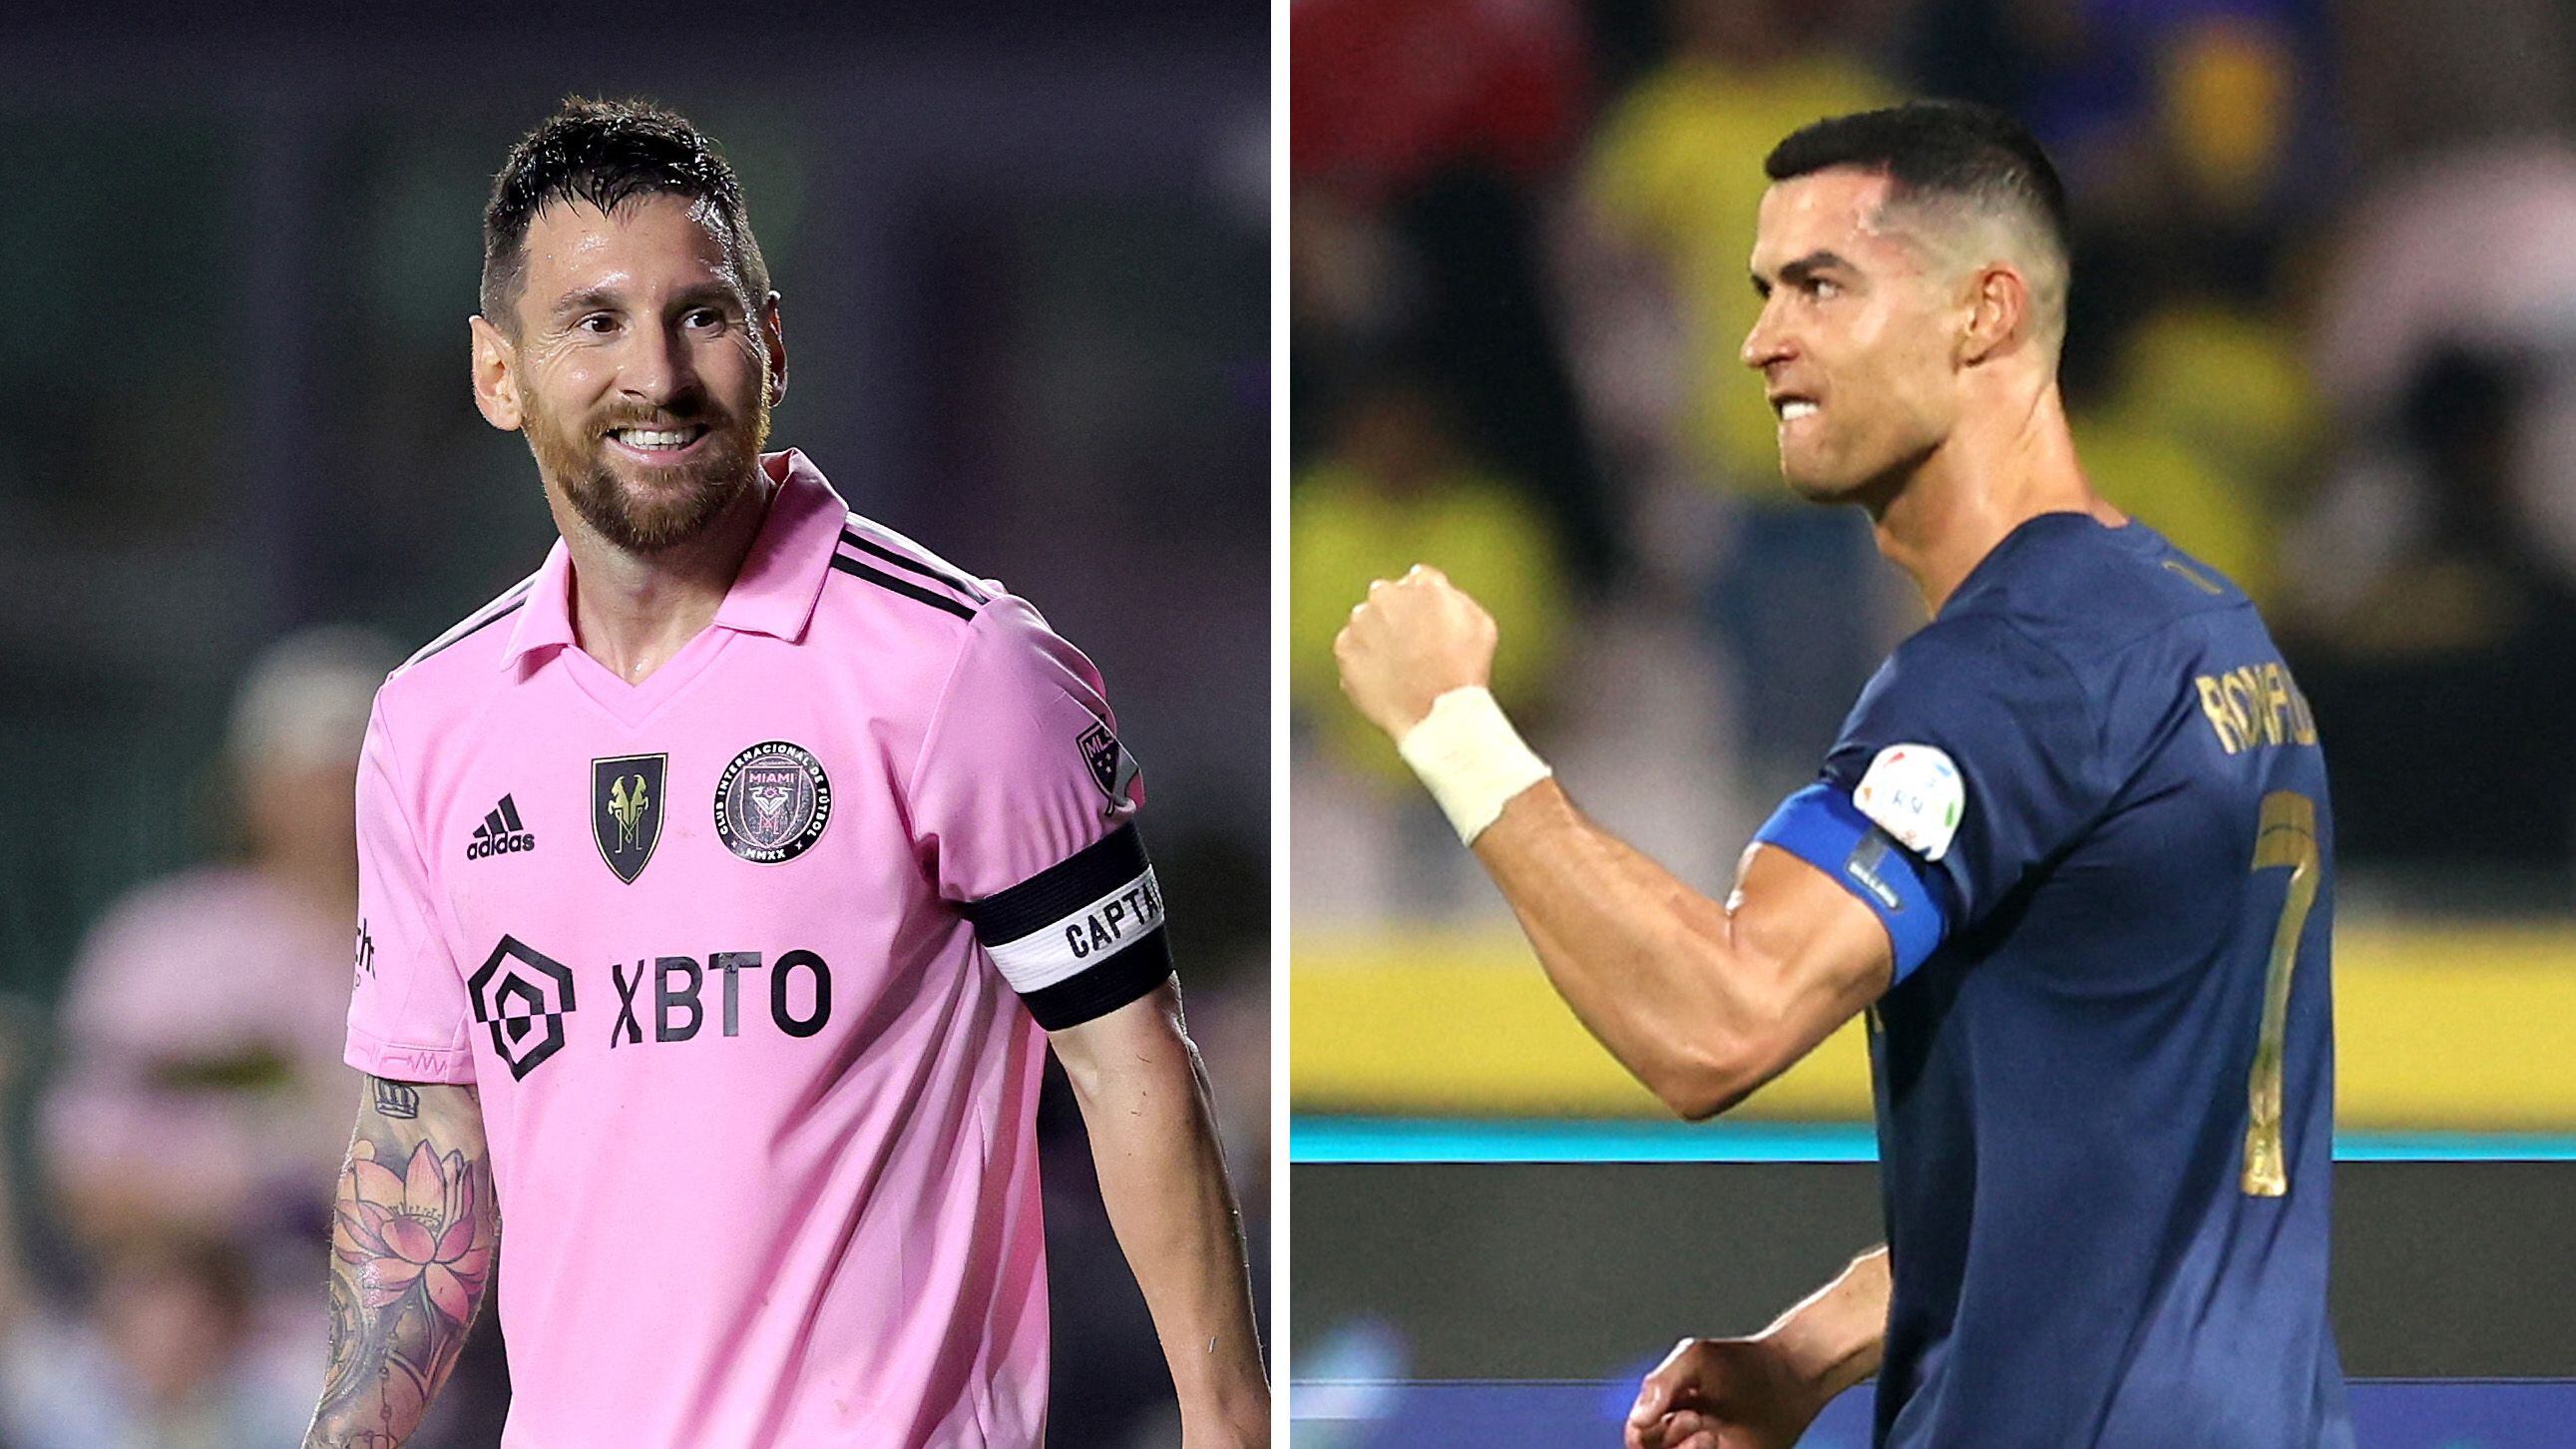 Ronaldo v Messi: the last dance in Saudi Arabia or a fresh start